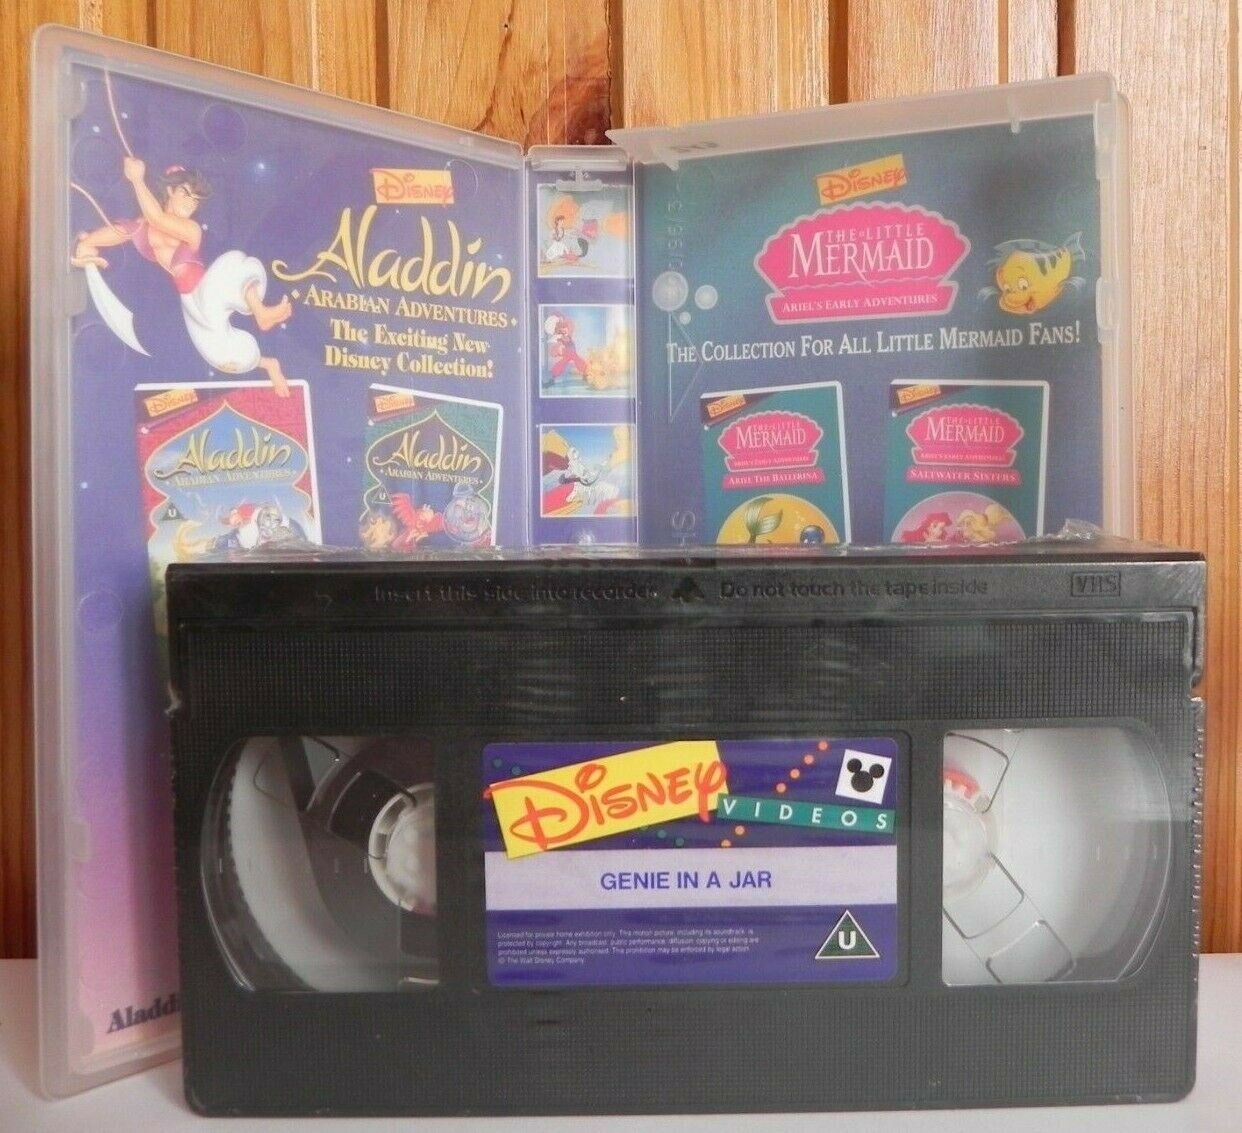 Aladdin: Arabian Adventures - Walt Disney - Brand New Sealed - Children's - VHS-